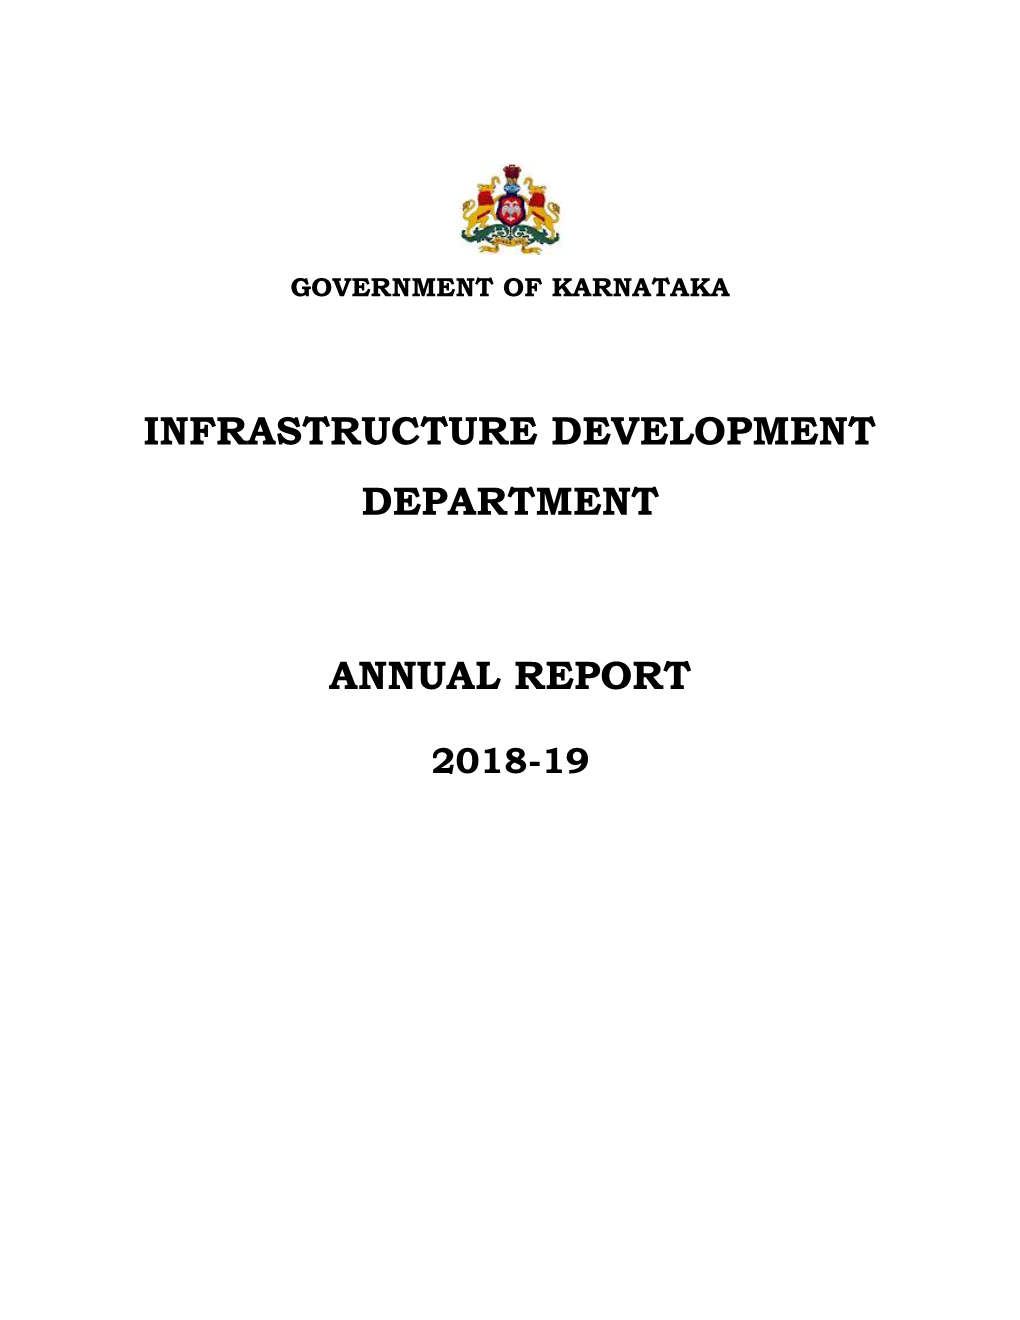 Infrastructure Development Department Annual Report